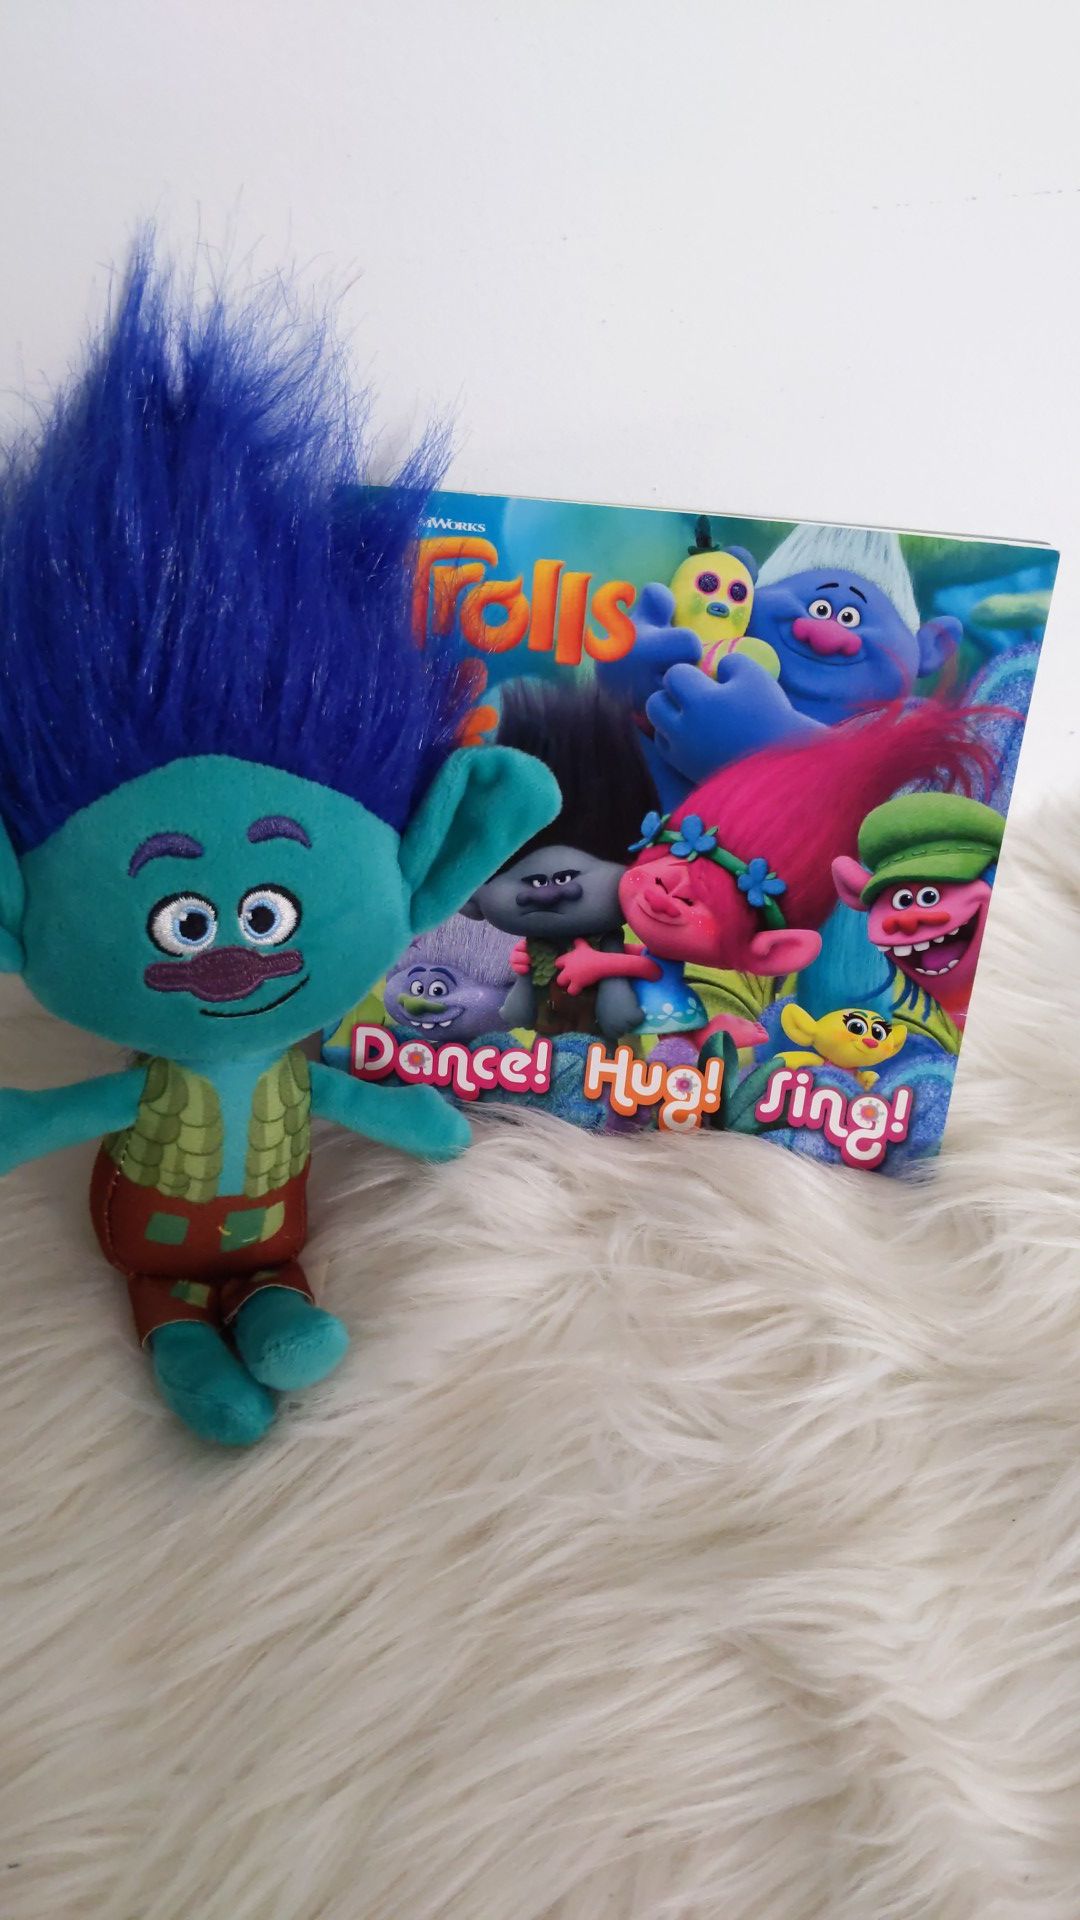 Trolls / Trolls World Tour - Book and Branch, stuffed animal gift set